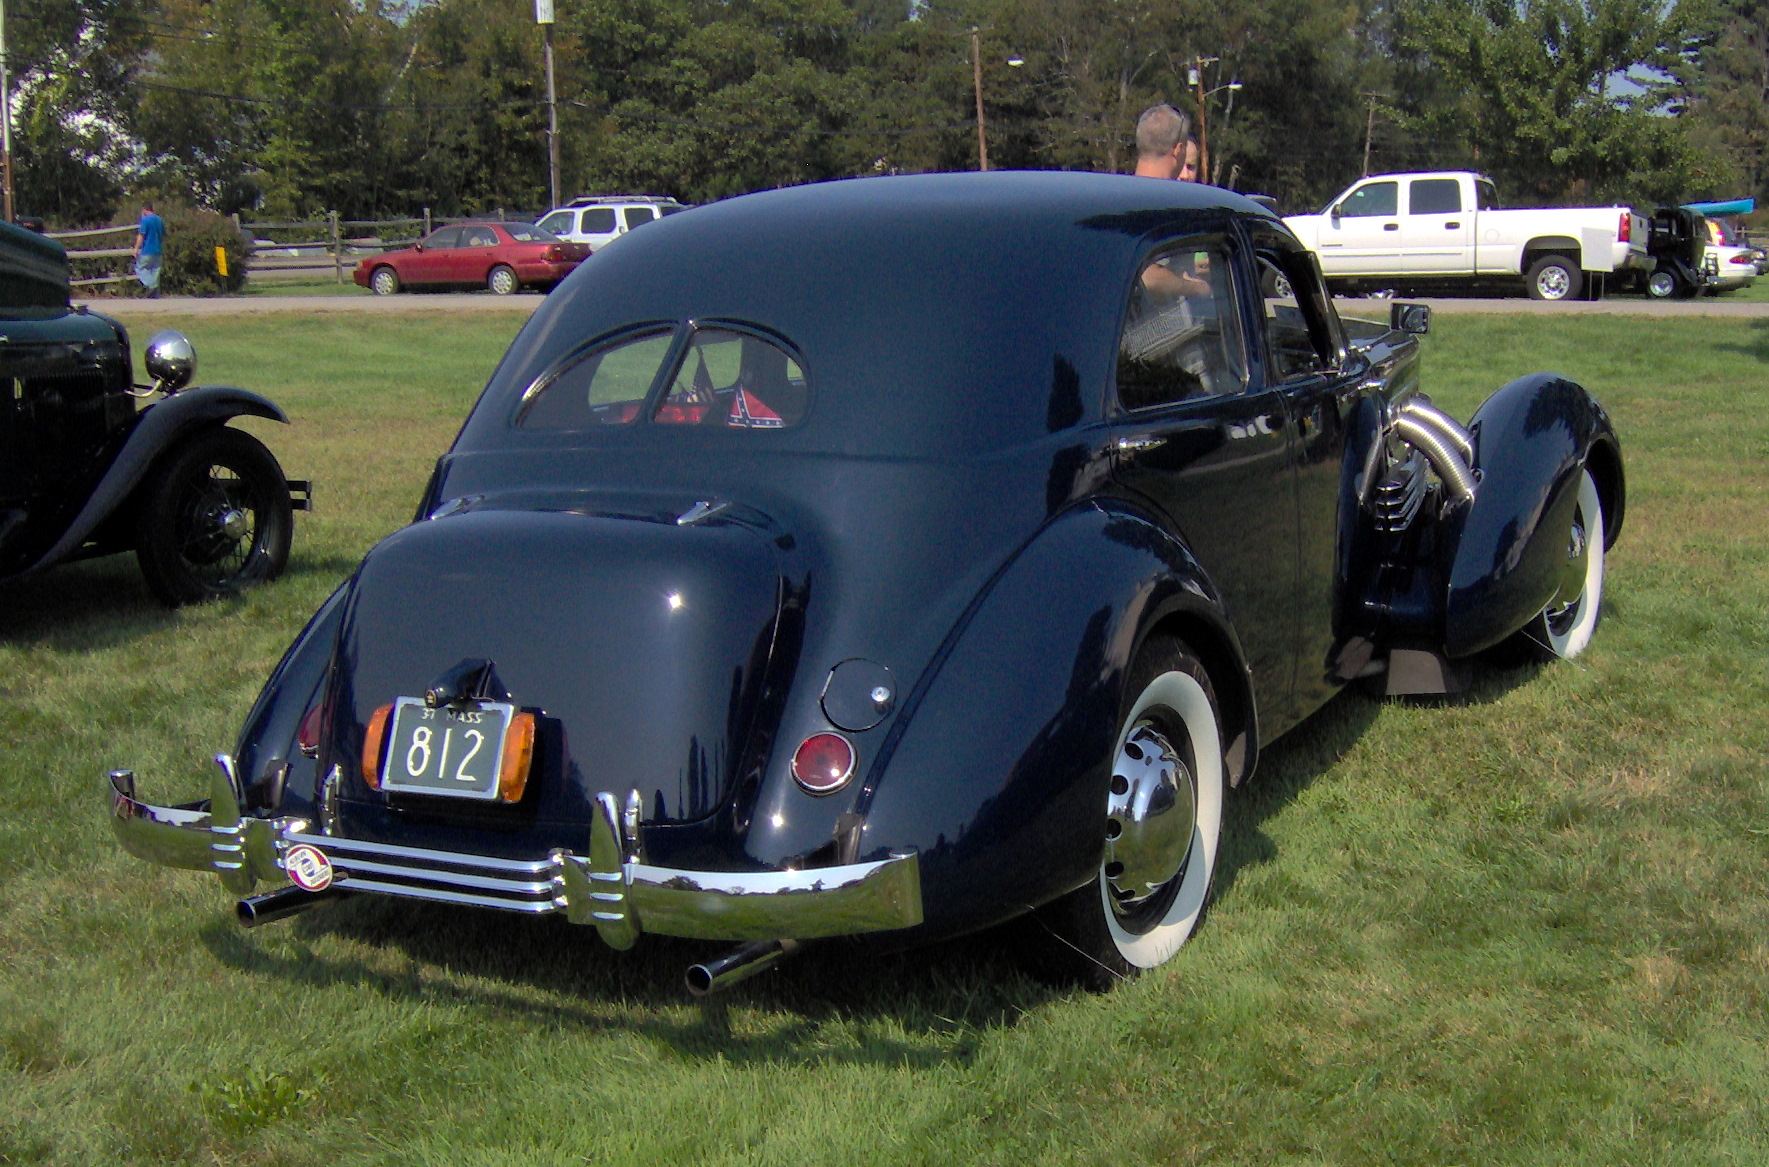 File:1937 Cord 812 rear.JPG - Wikimedia Commons